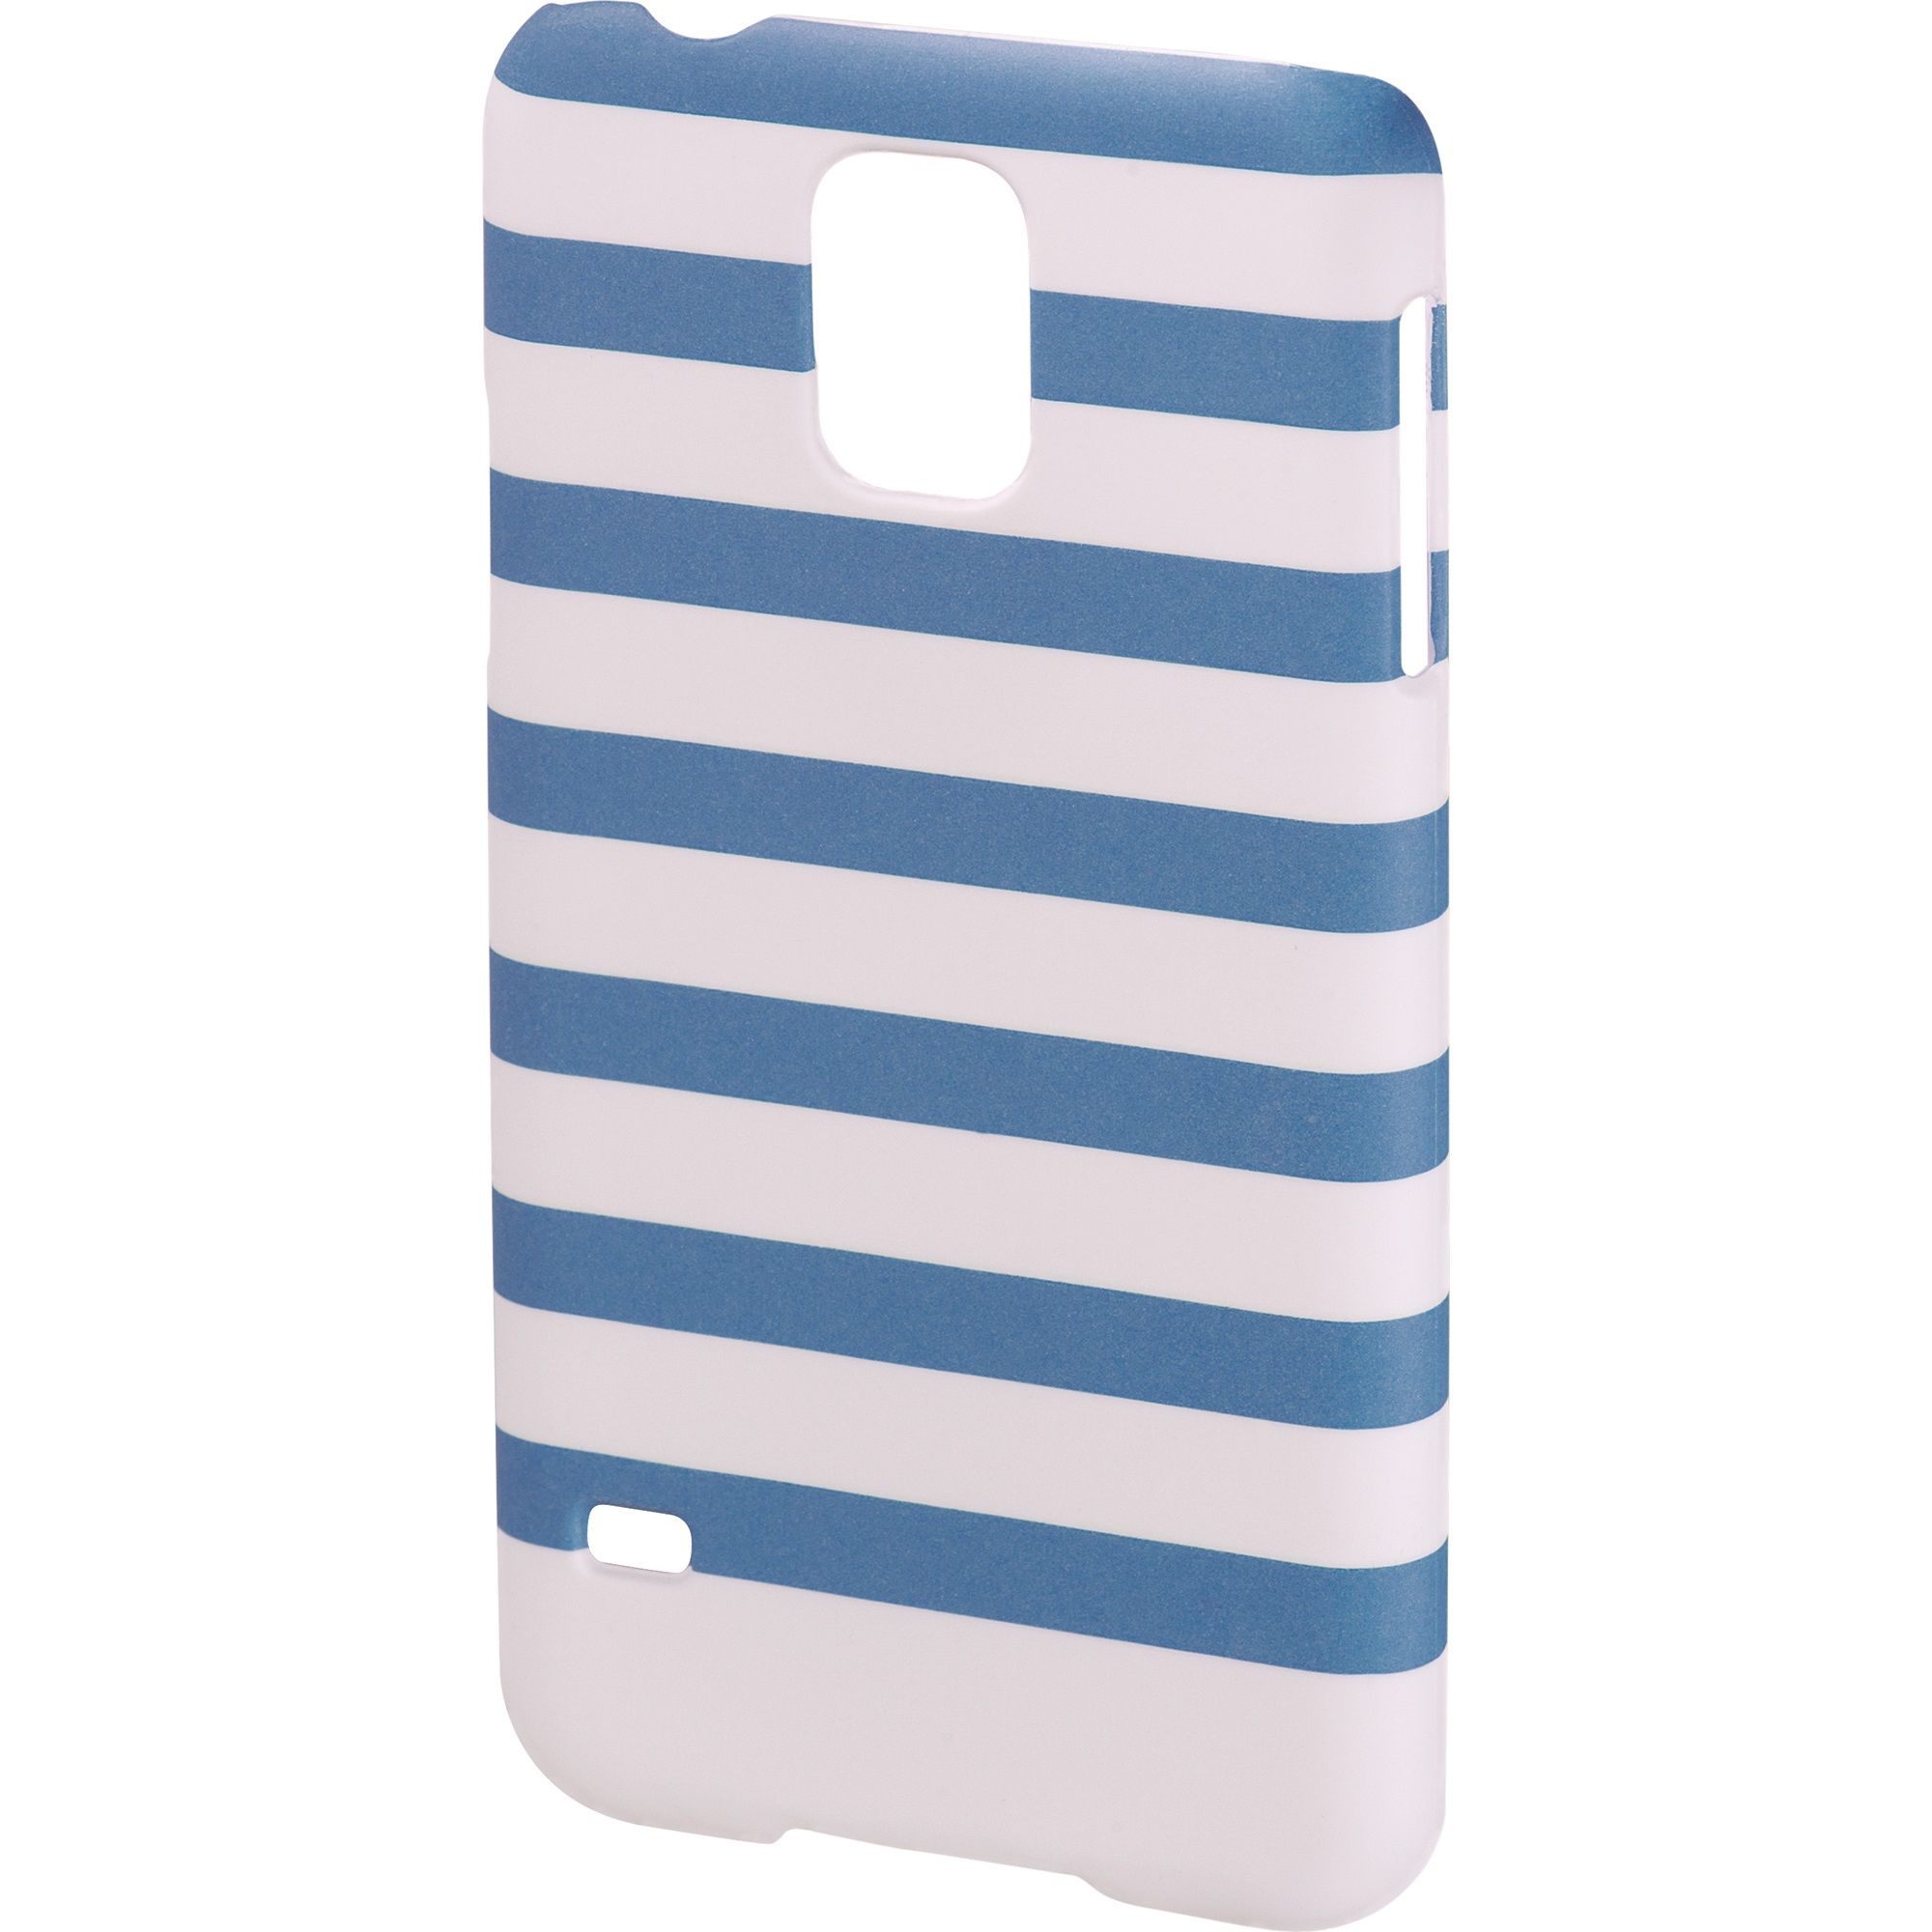  Capac protectie Hama 138256 pentru Samsung Galaxy S5, Albastru 